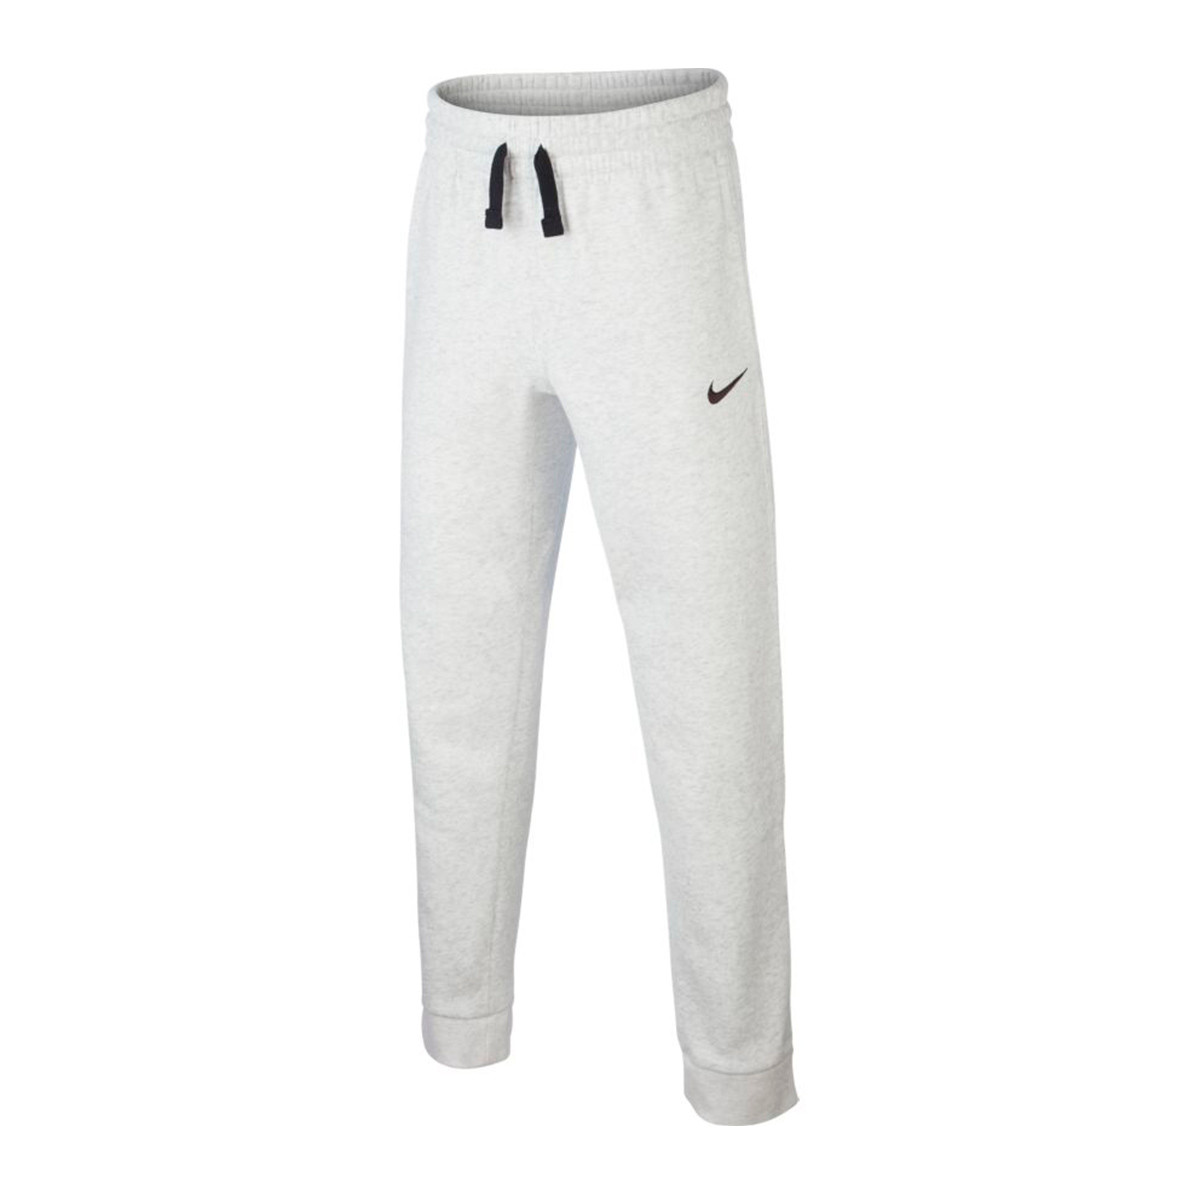 Long pants Nike N45 Birch heather-Black 